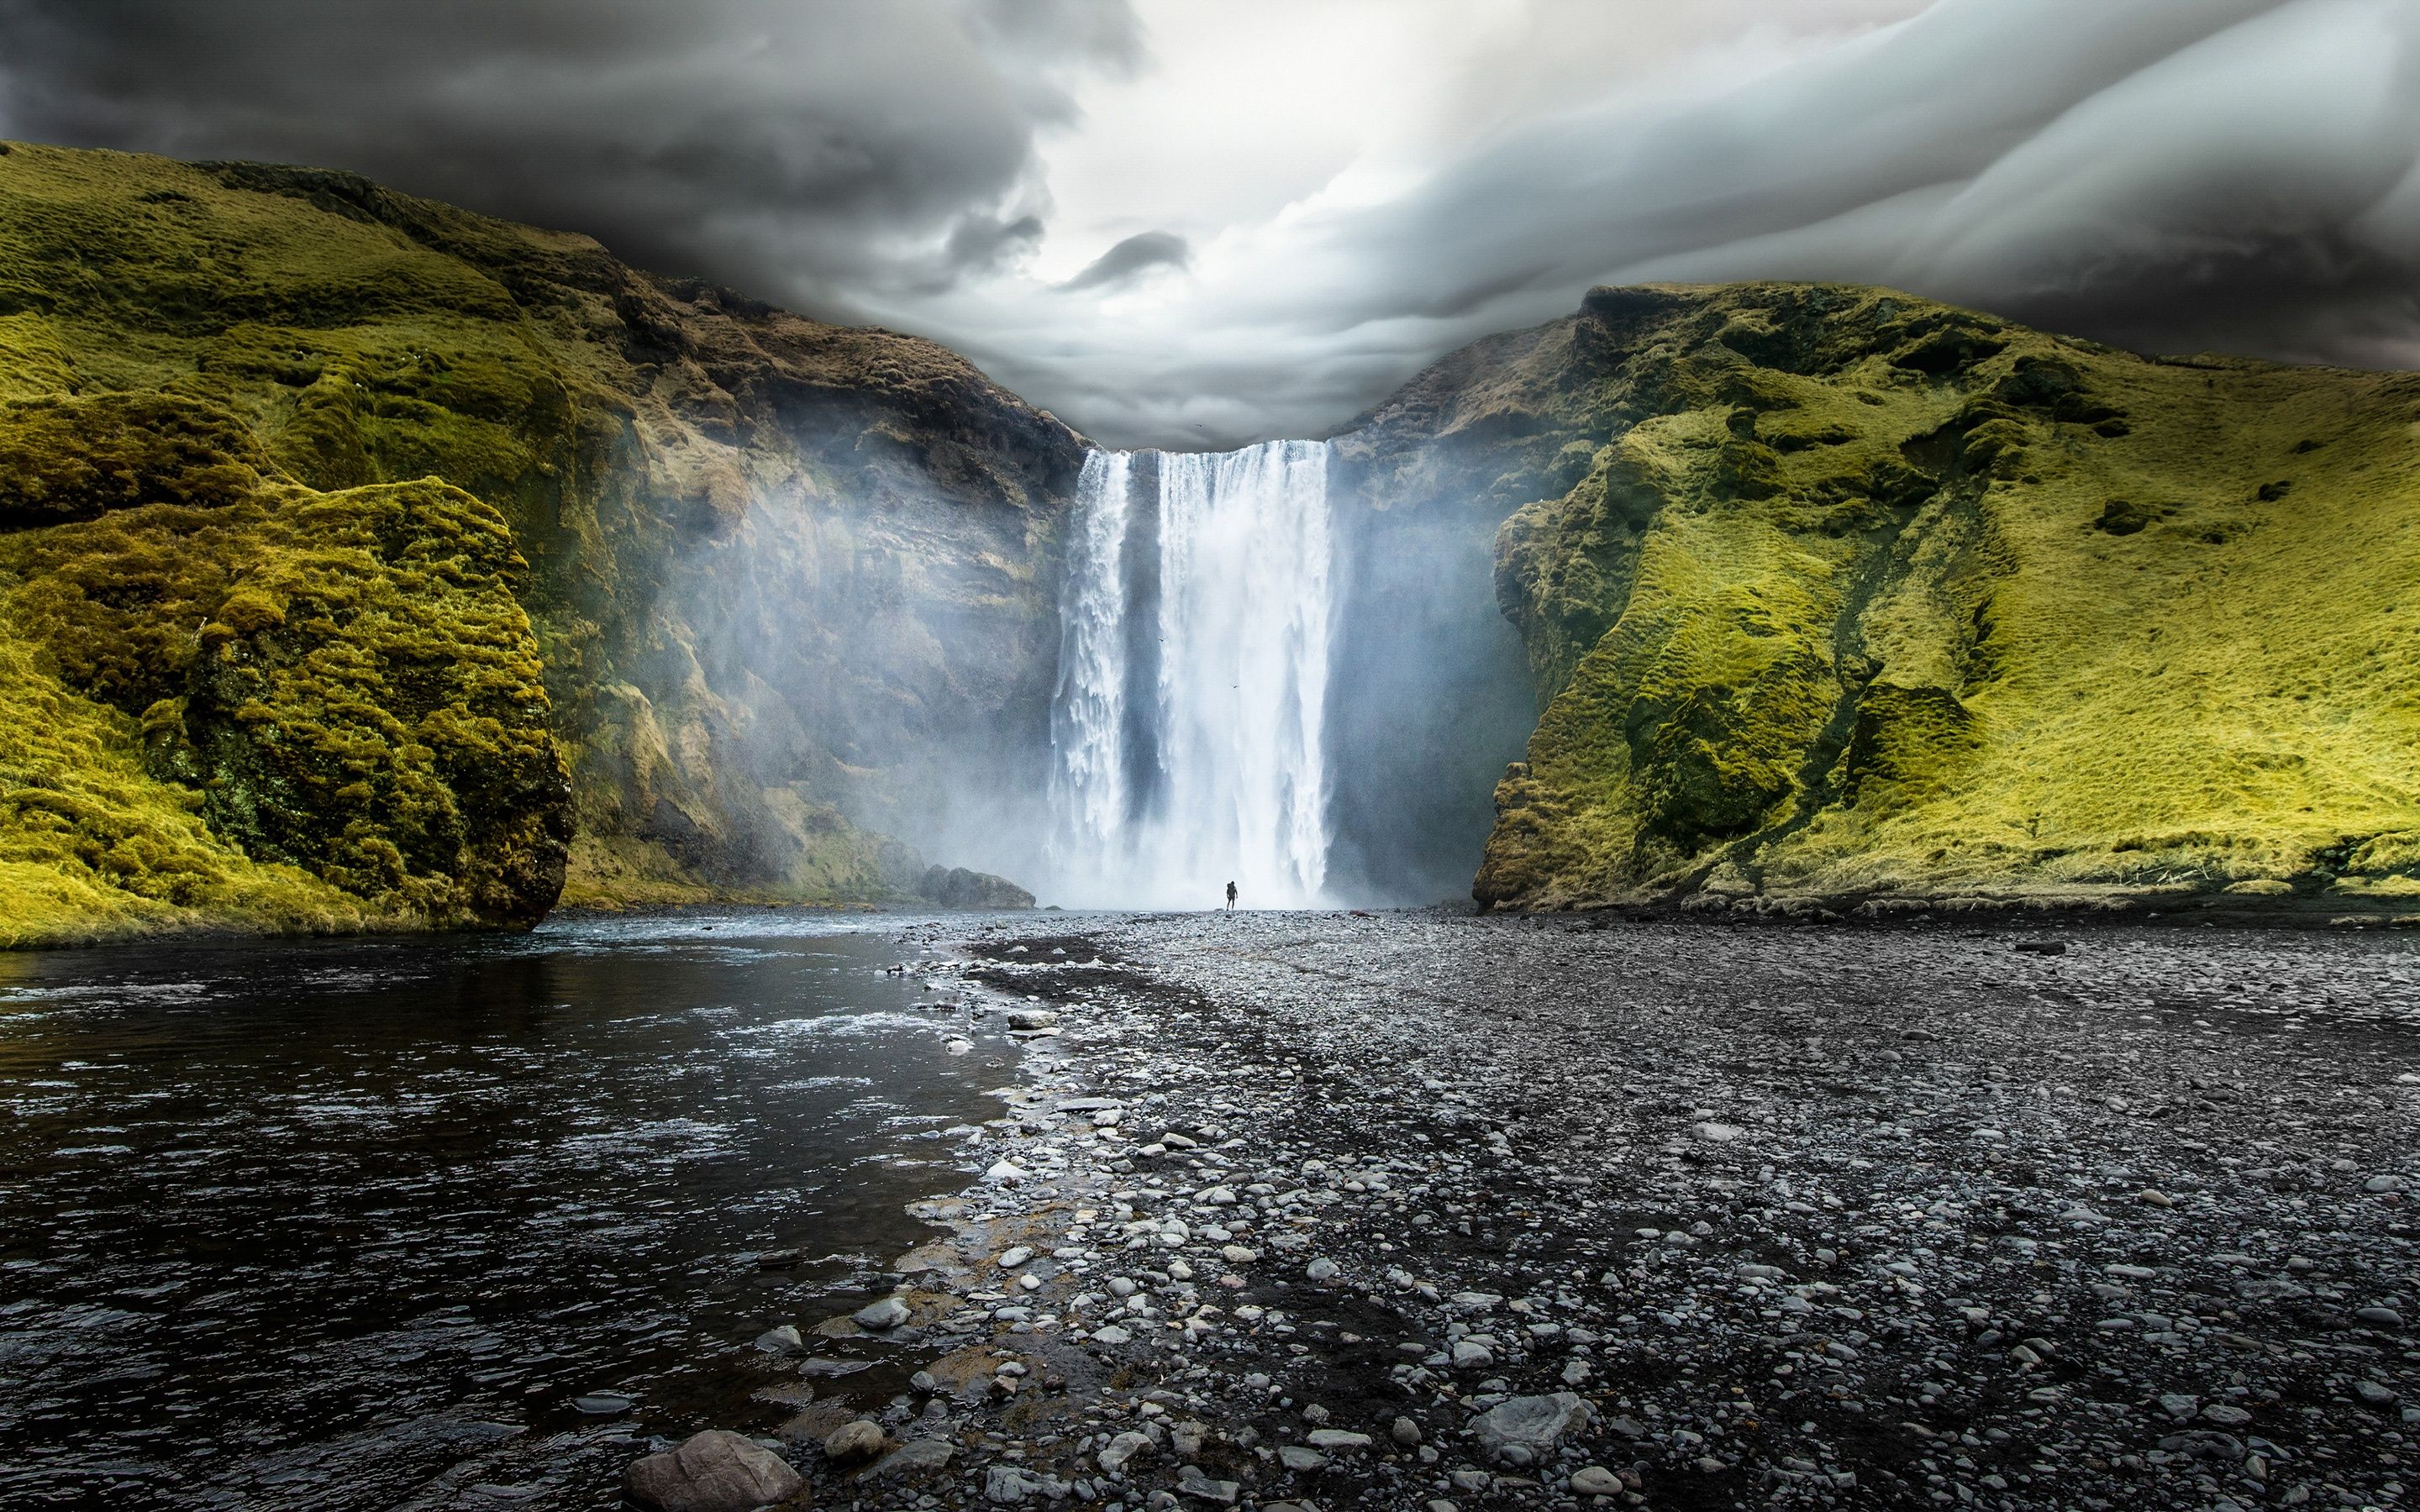 Skogafoss Waterfalls Iceland Wallpaper in jpg format for free download